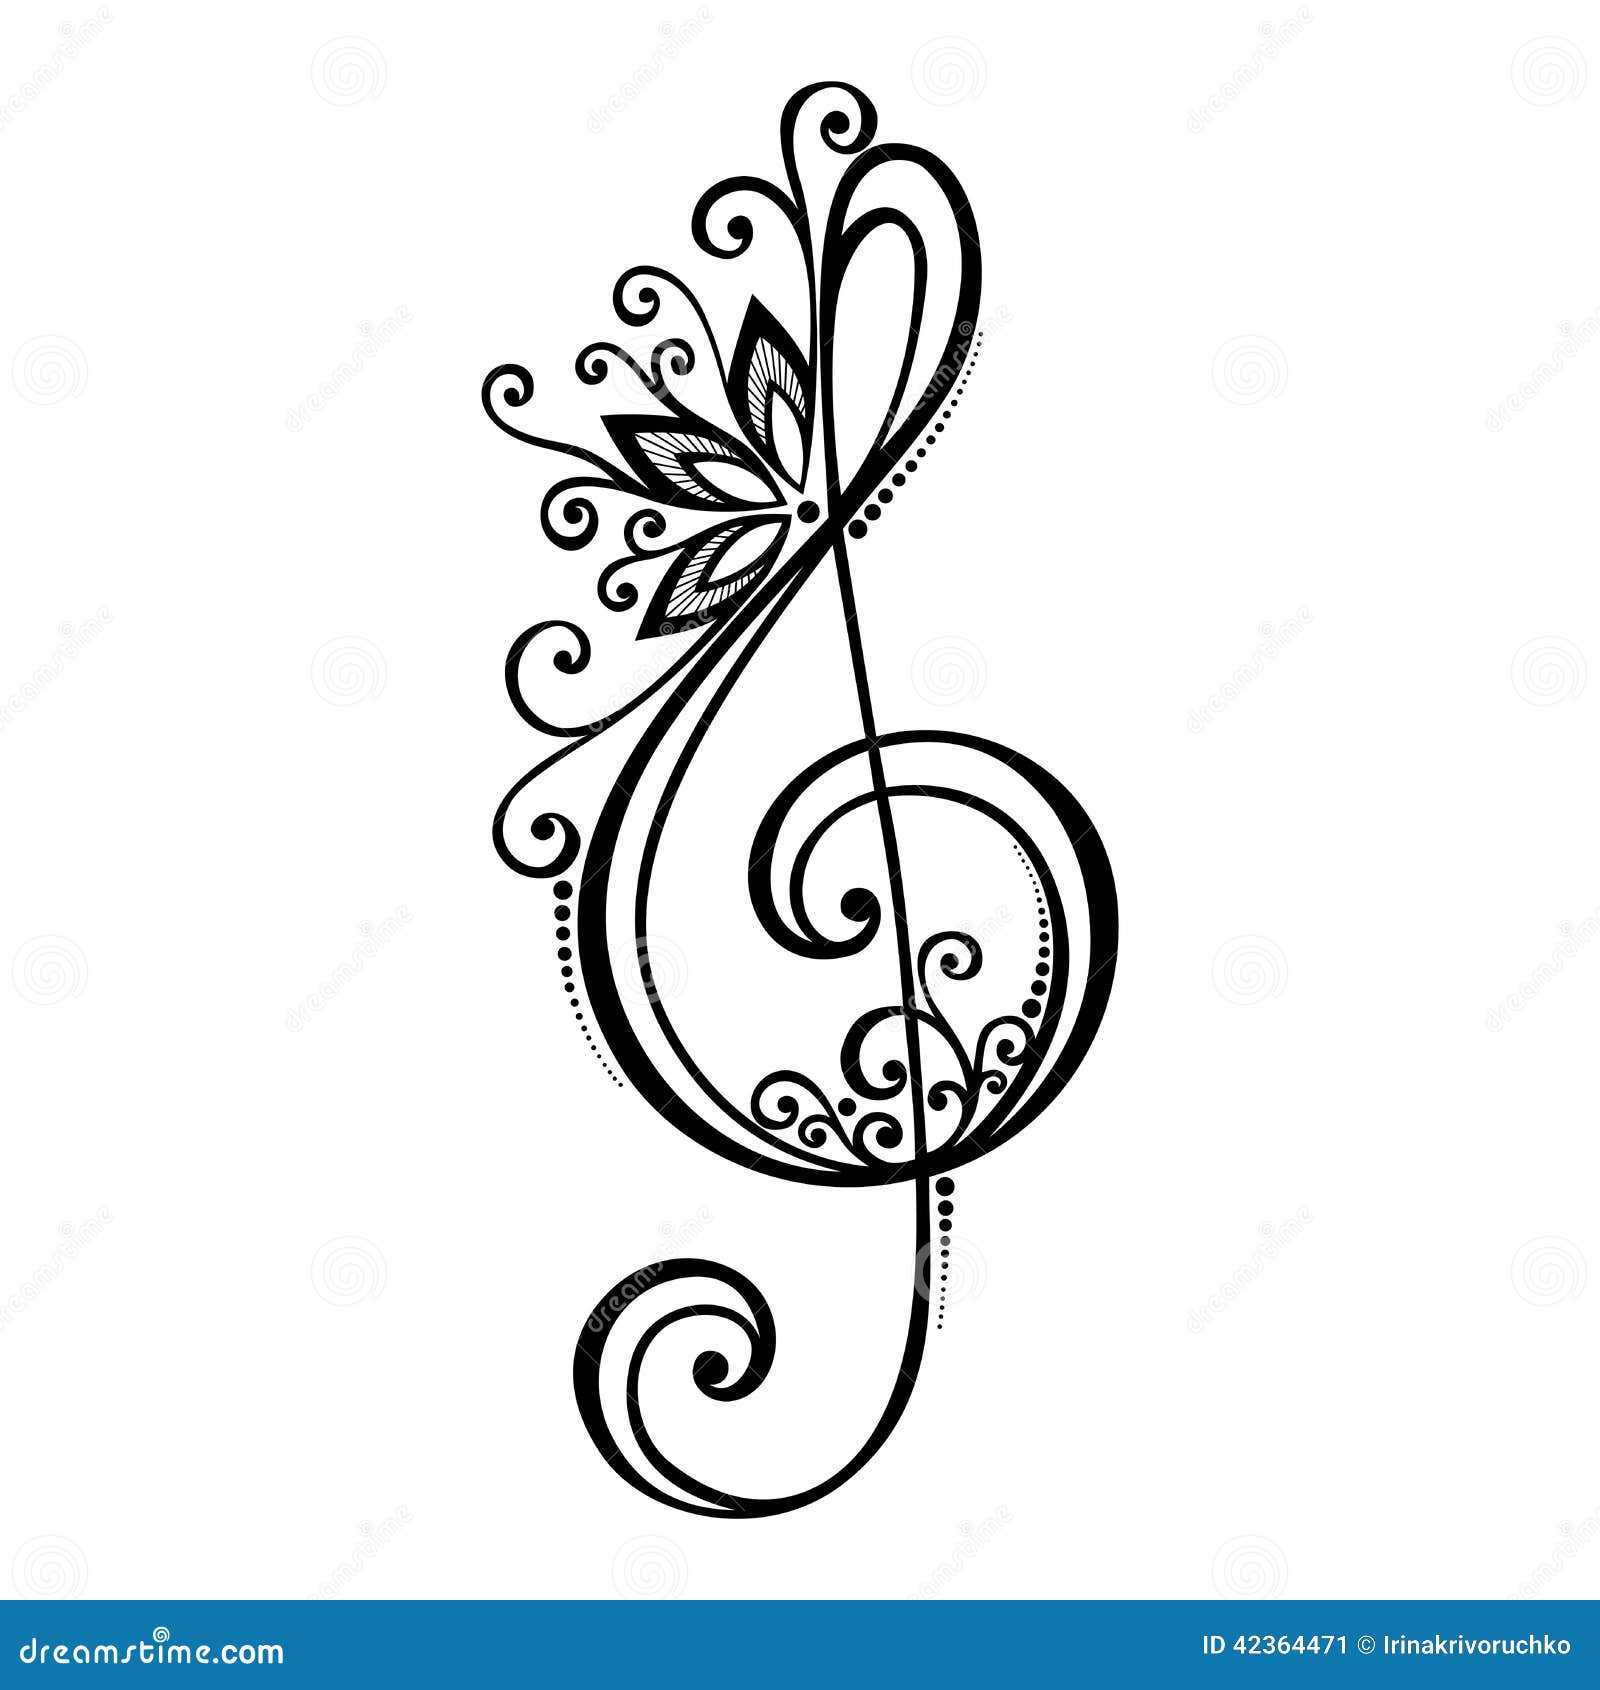 treble clef tattoo by J-Mobius on DeviantArt